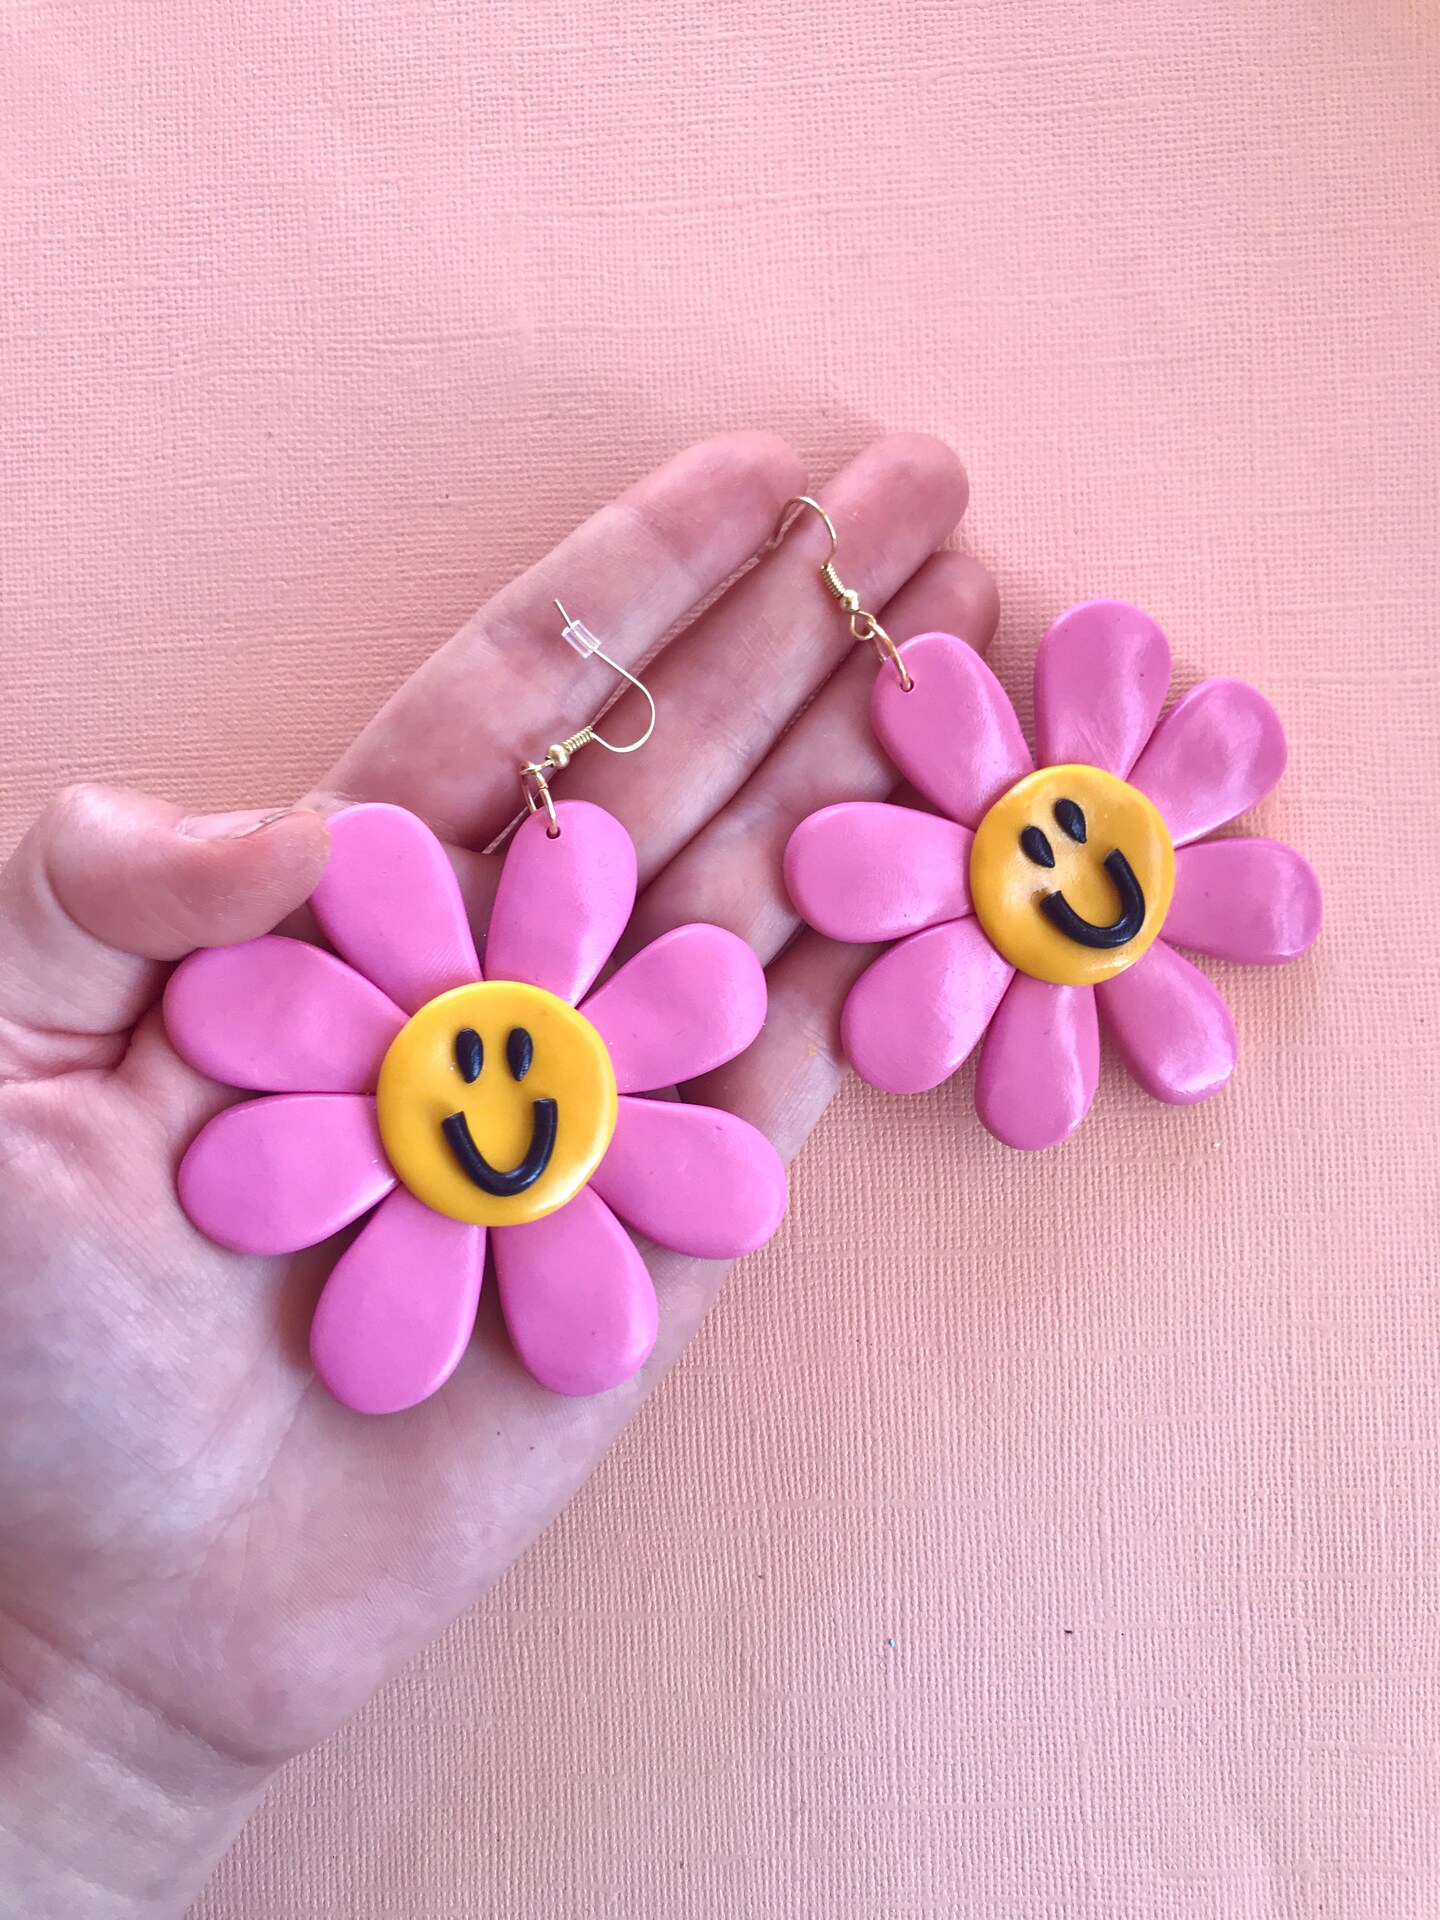 Flower power giant flower earrings, pink smile flower earrings, retro statement earrings, hippie style, groovy earrings, giant flowers 208522789449596928